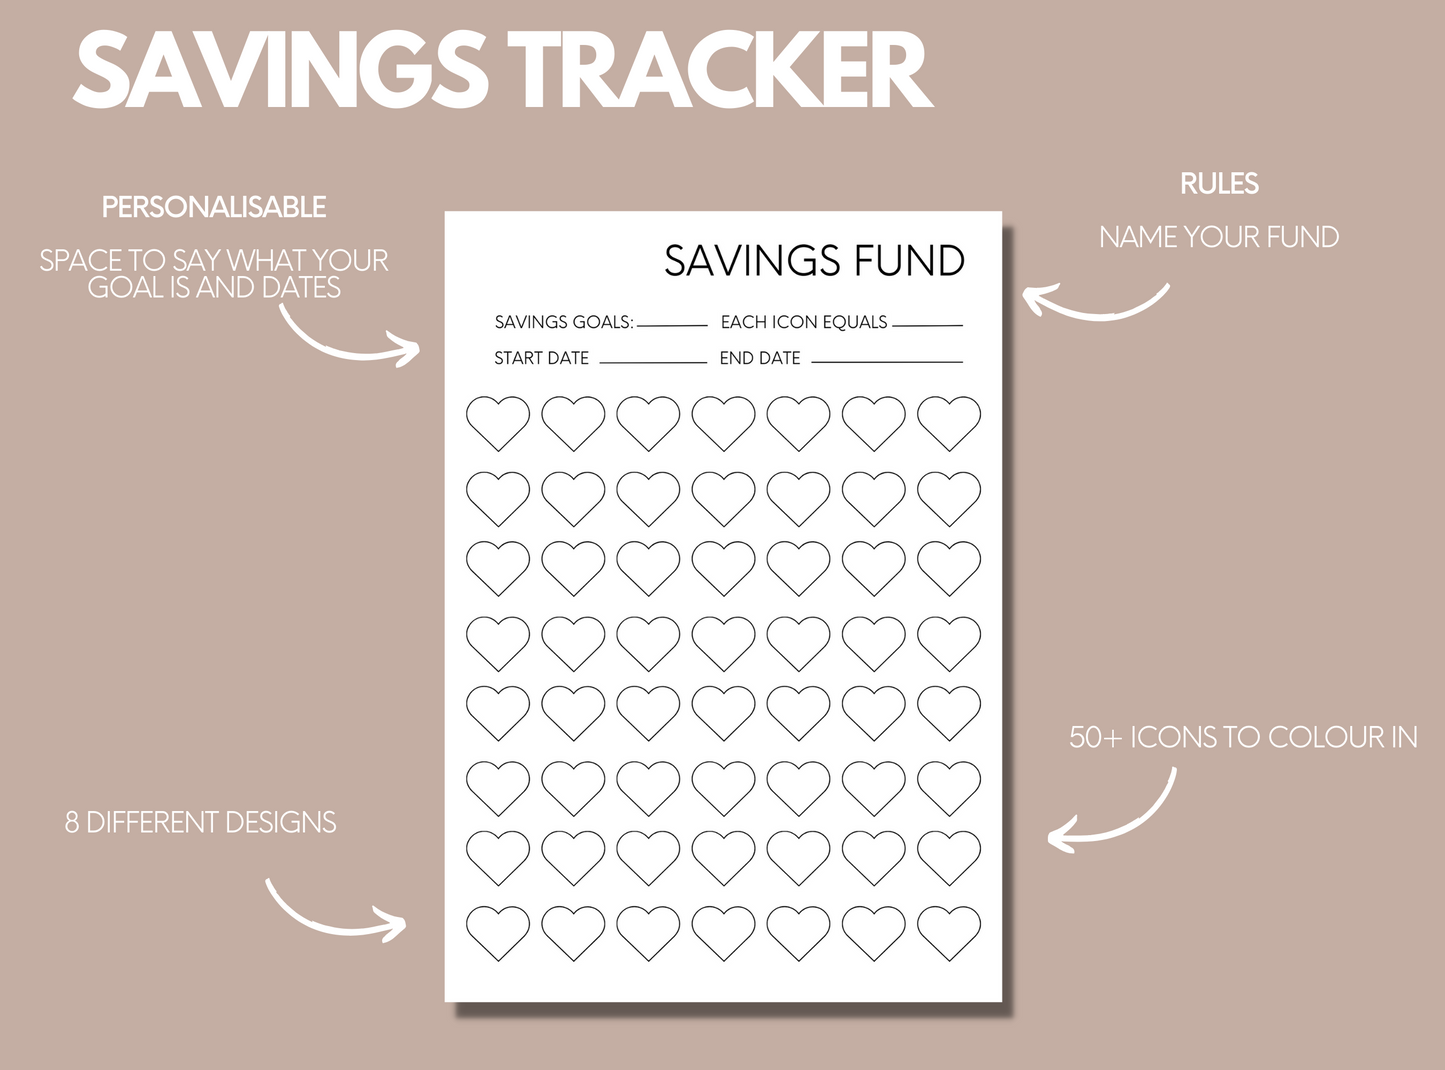 8 Savings Tracker Printable PDFs - 5 Sizes - Christmas, Vacation & More